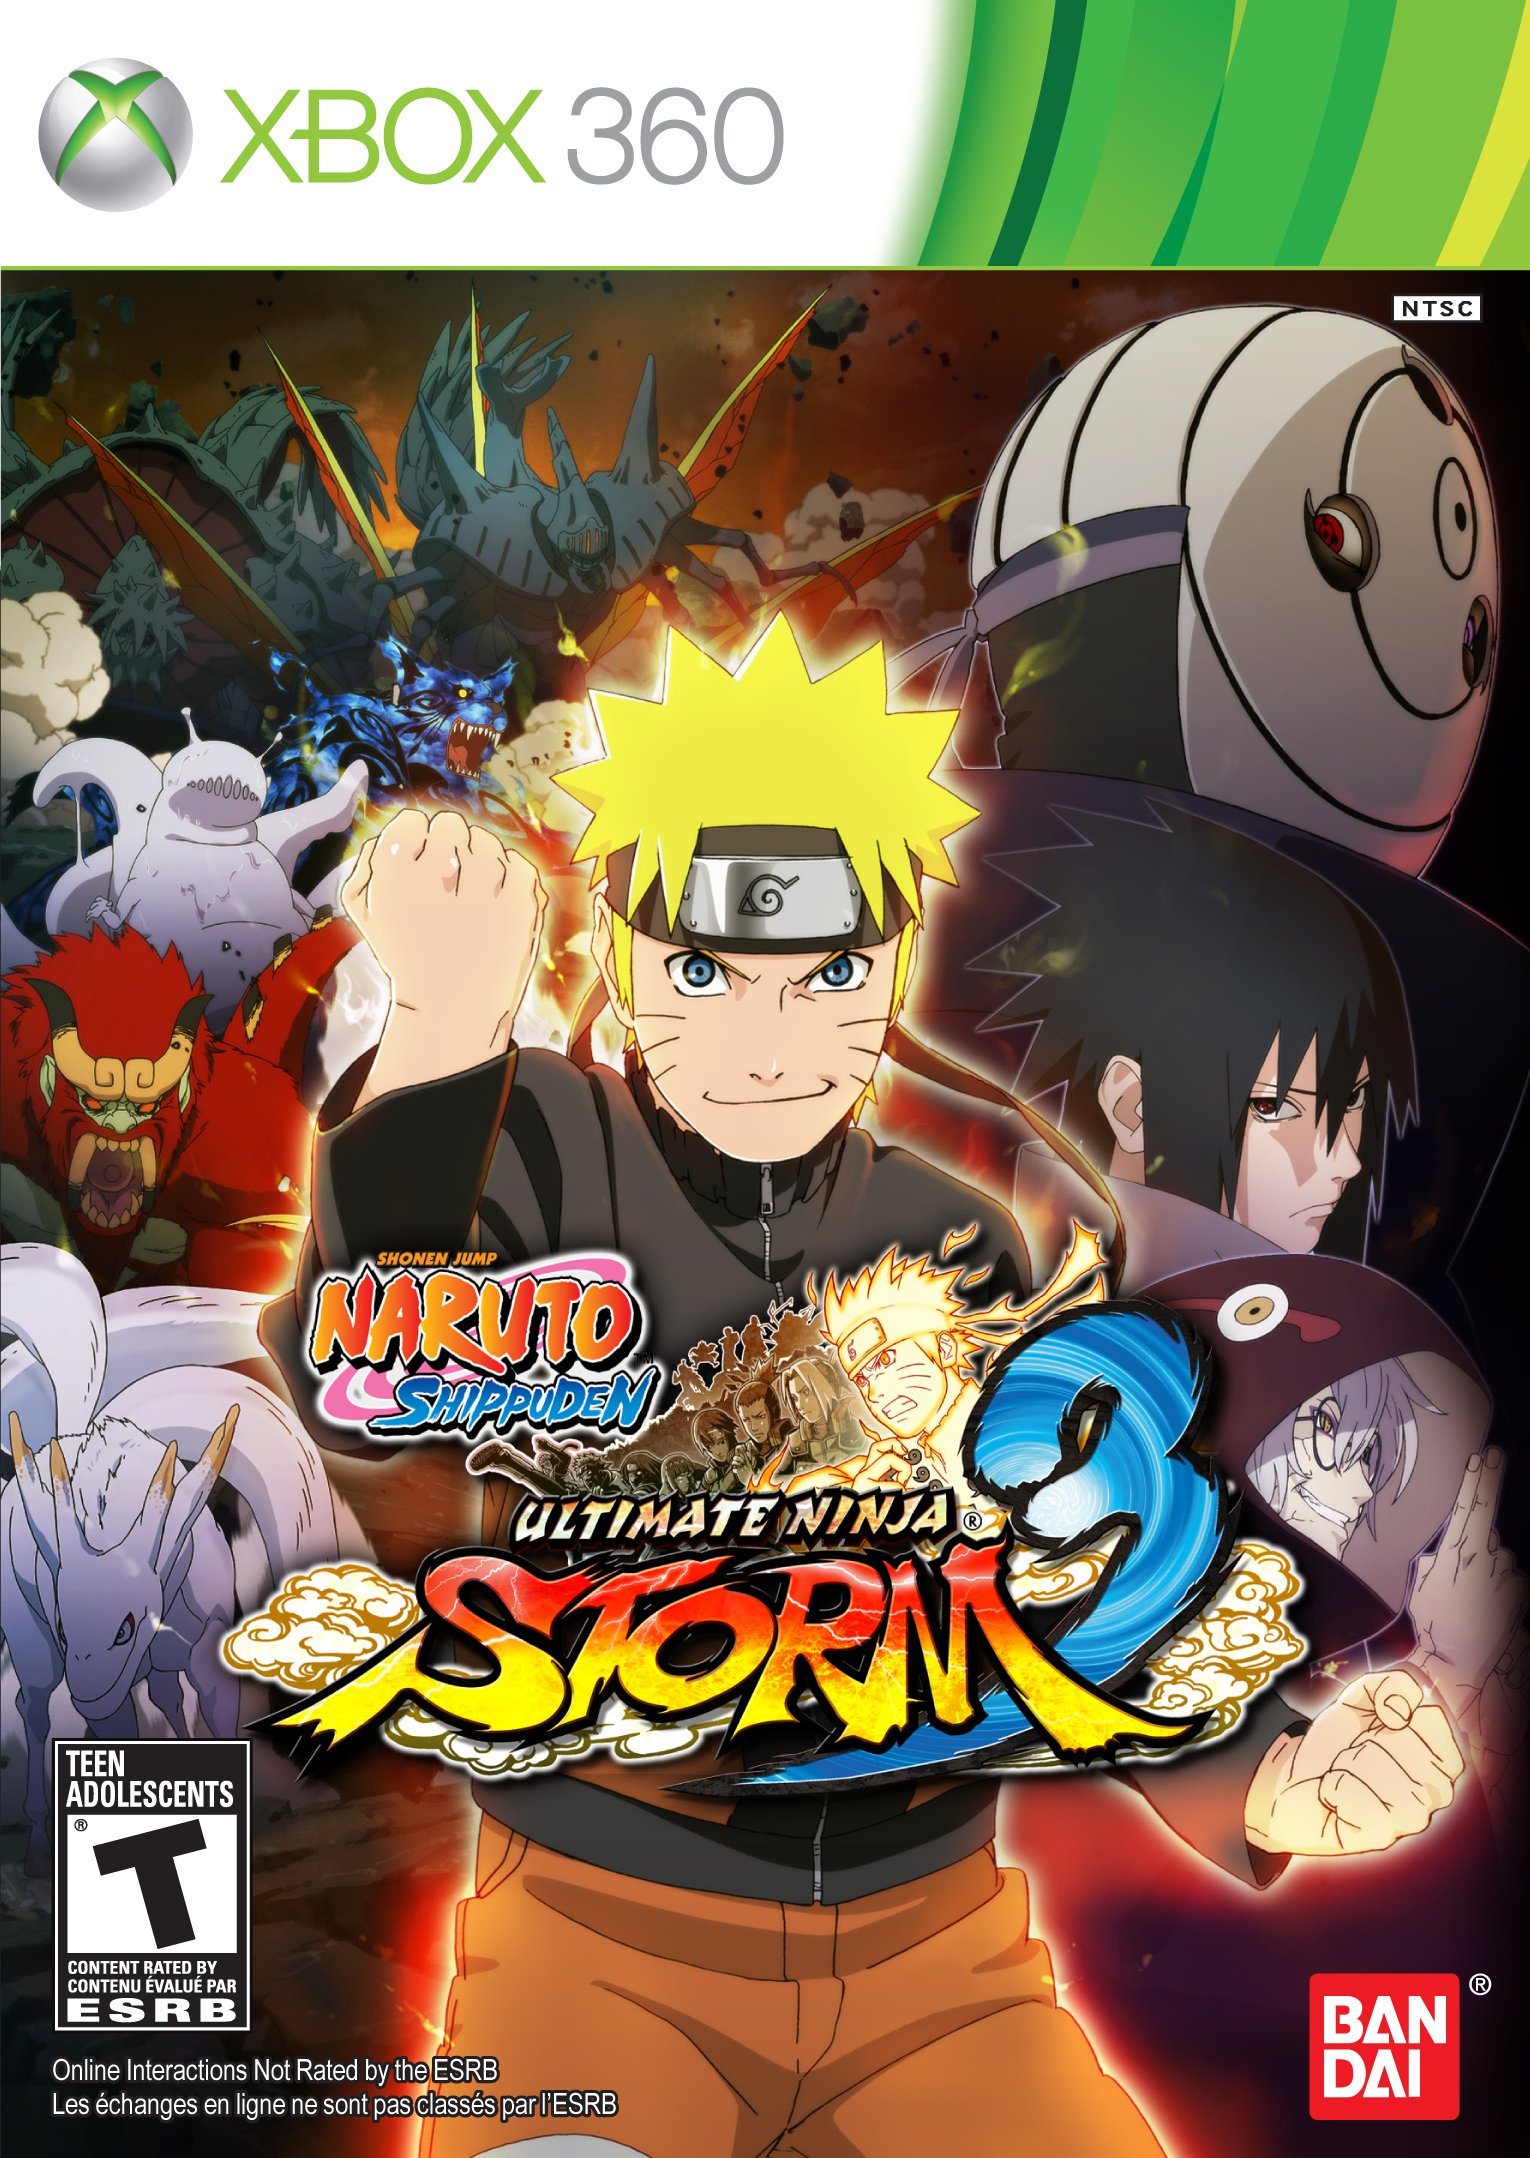 Naruto-Shippuden-Ultimate-Ninja-Storm-3 copertina xbox 360